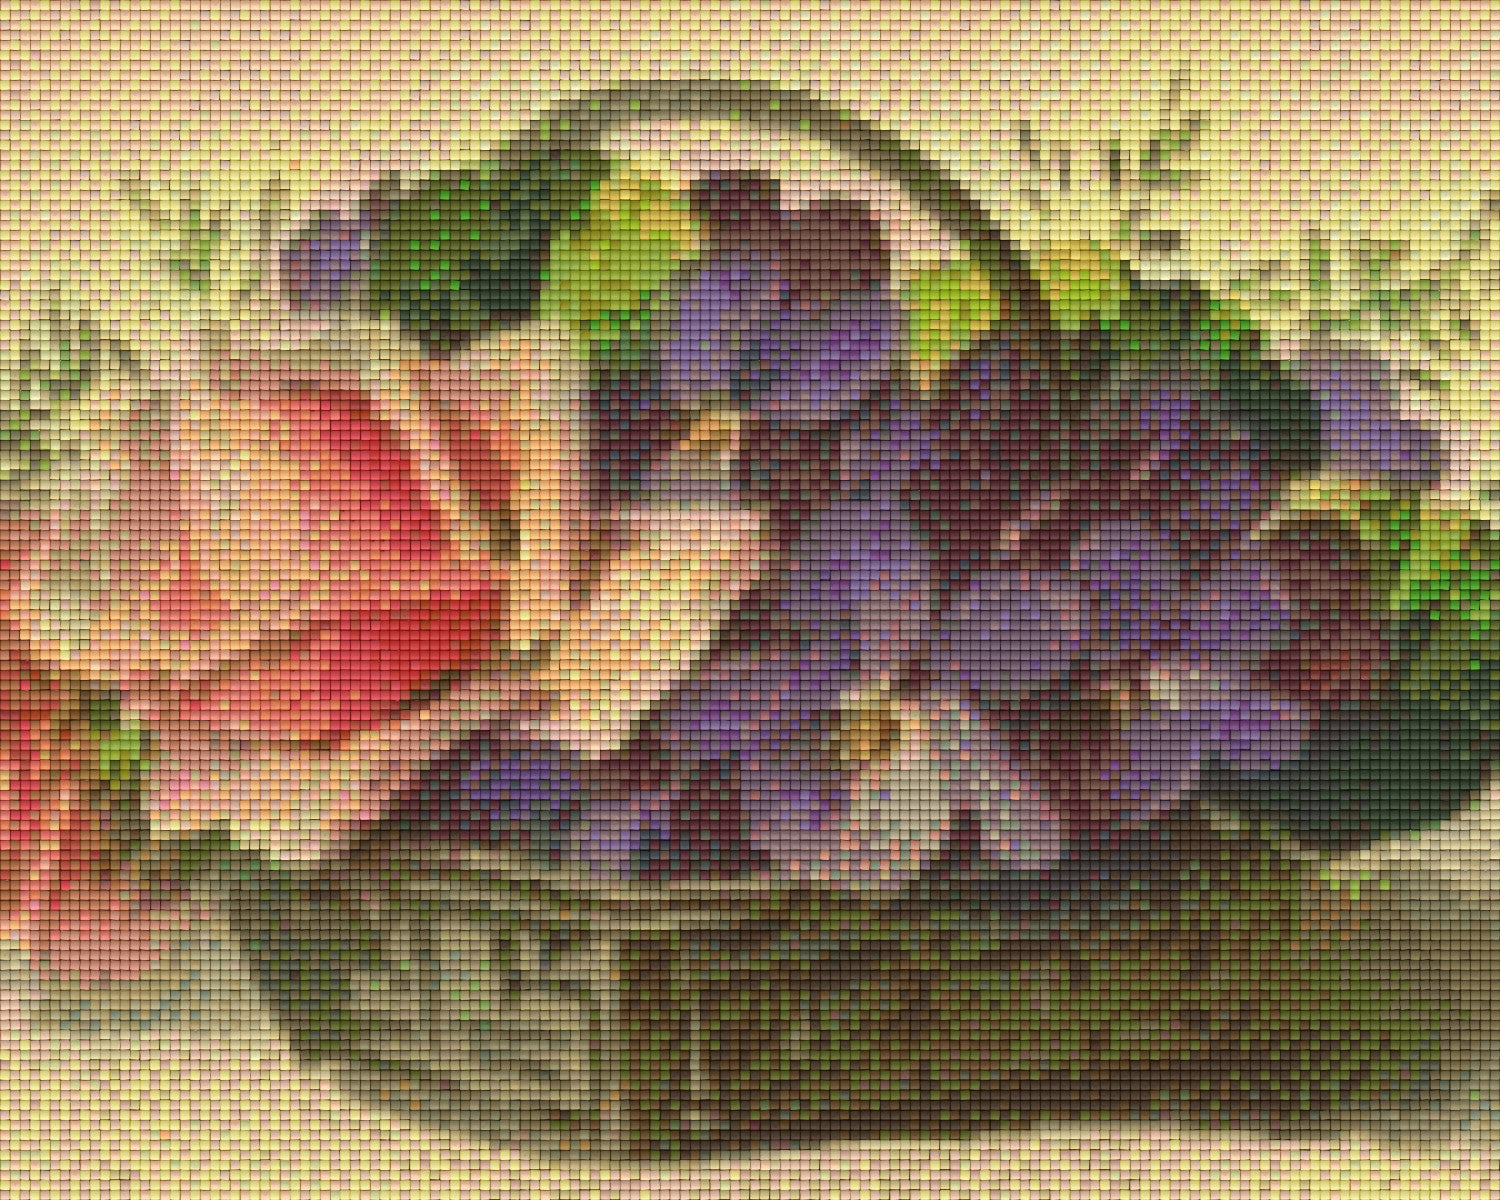 Pixelhobby classic set - basket with violets